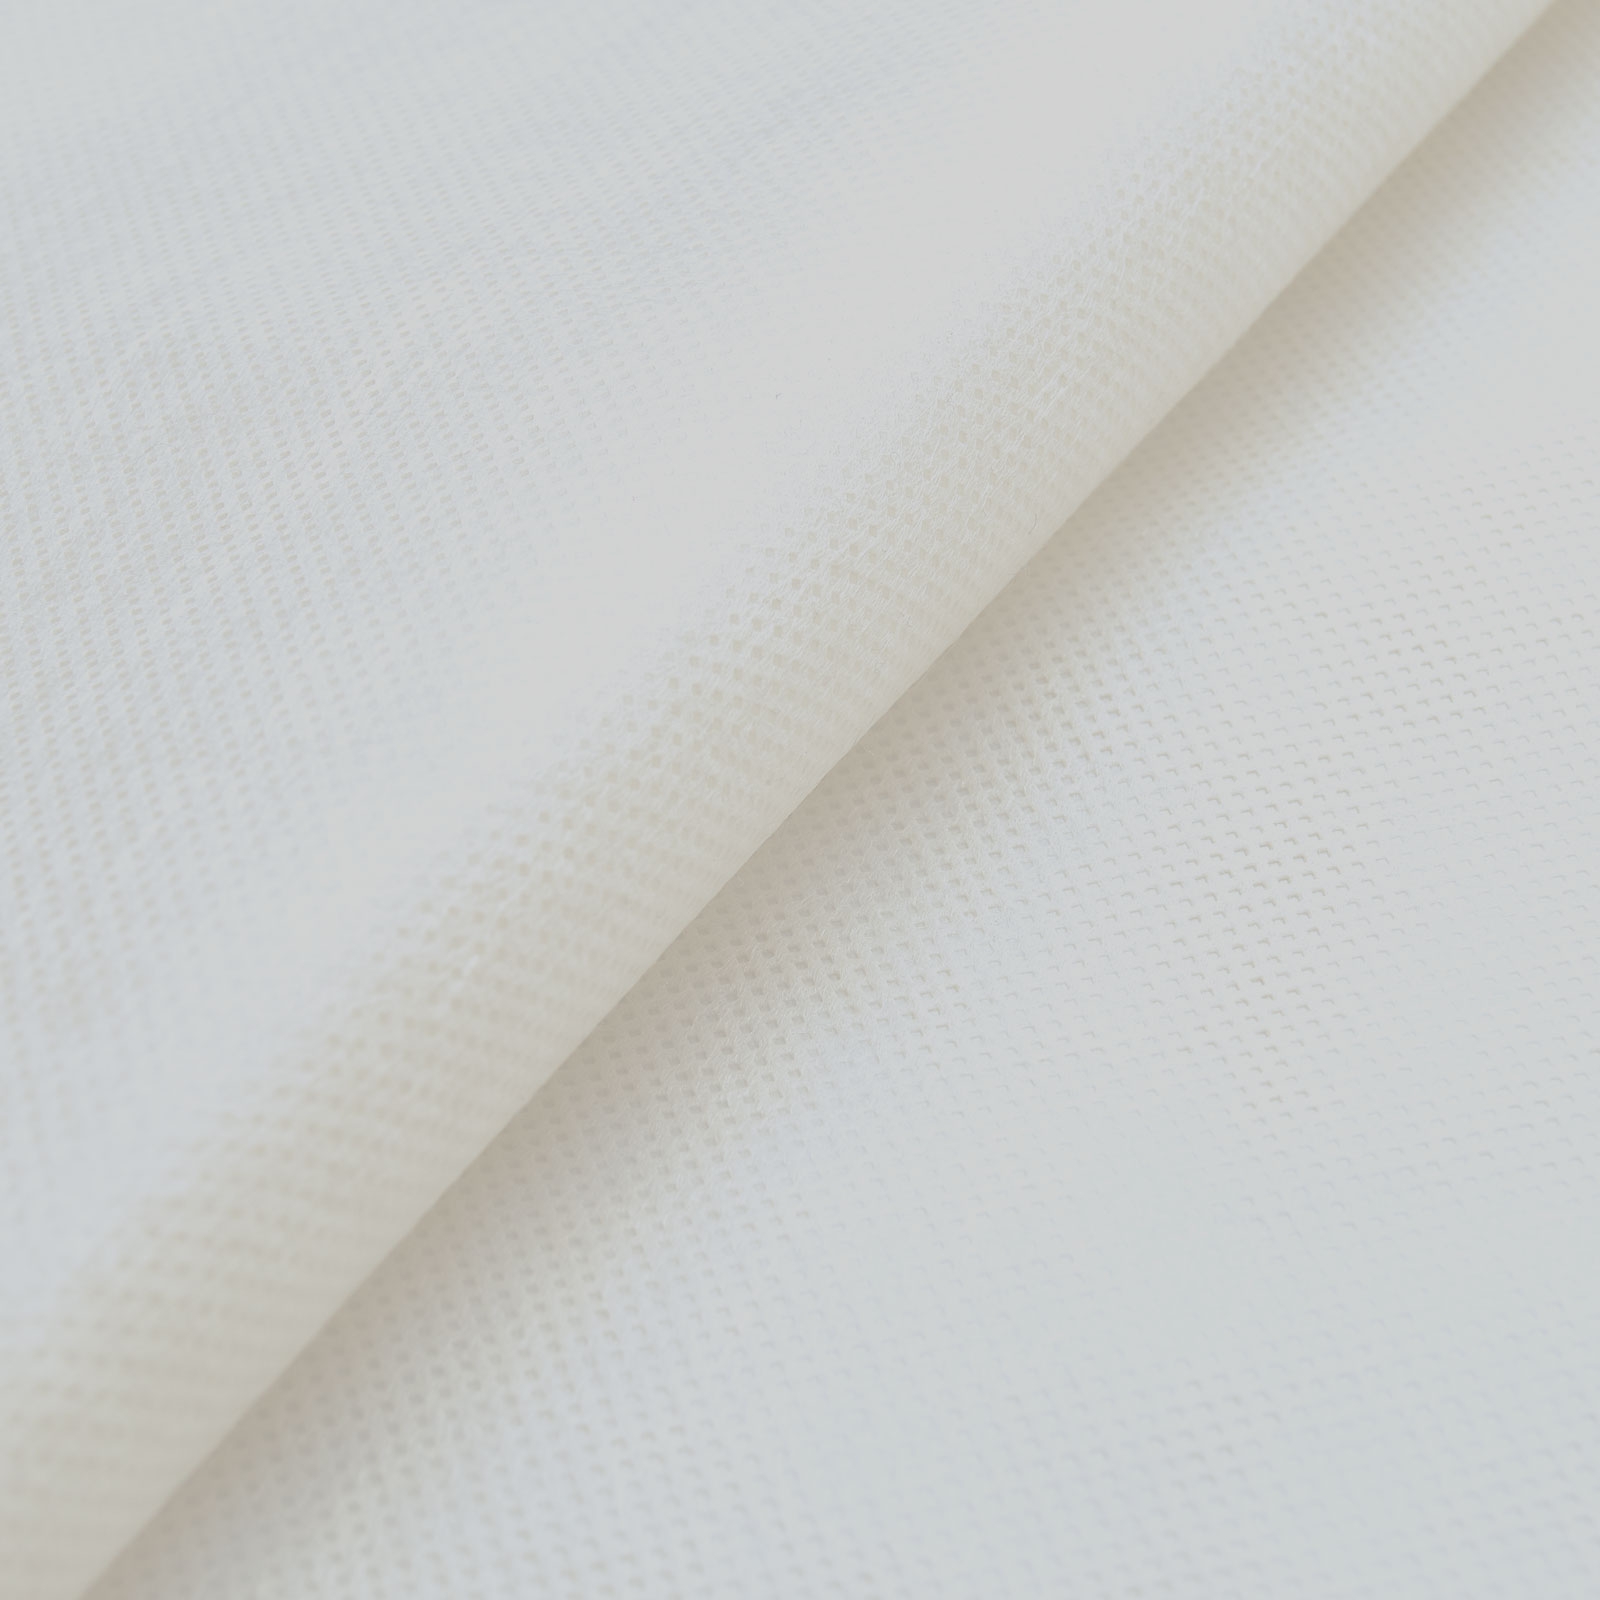 Furniture fleece / instep fleece - White